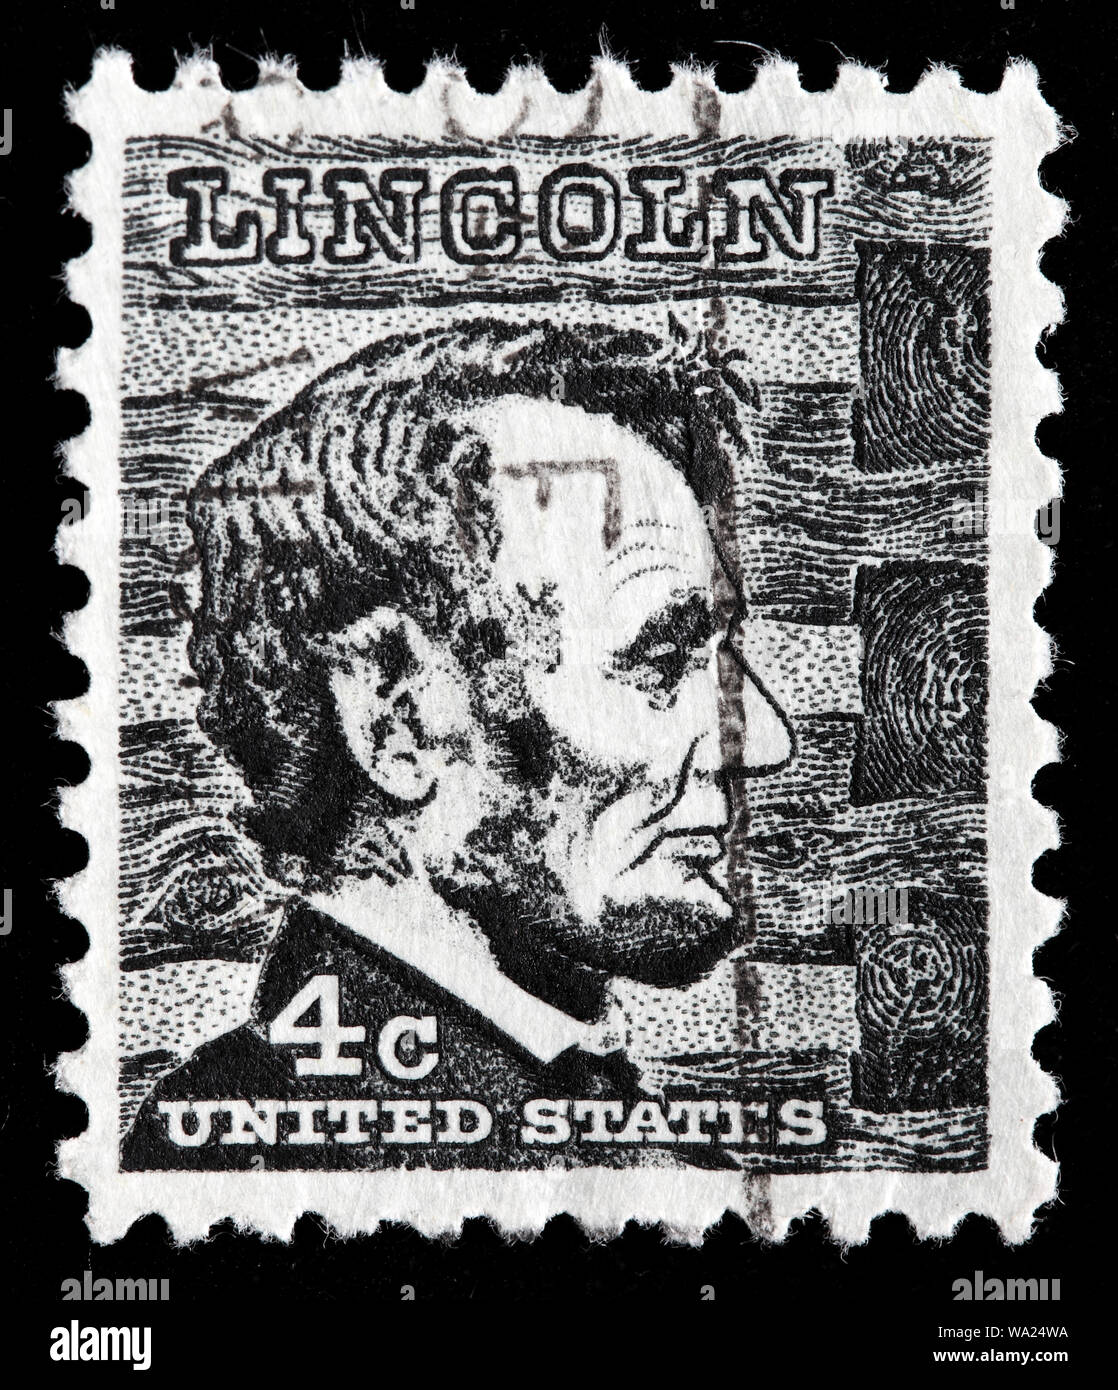 Abraham Lincoln (1809-1865), President of USA, postage stamp, USA, 1965 Stock Photo